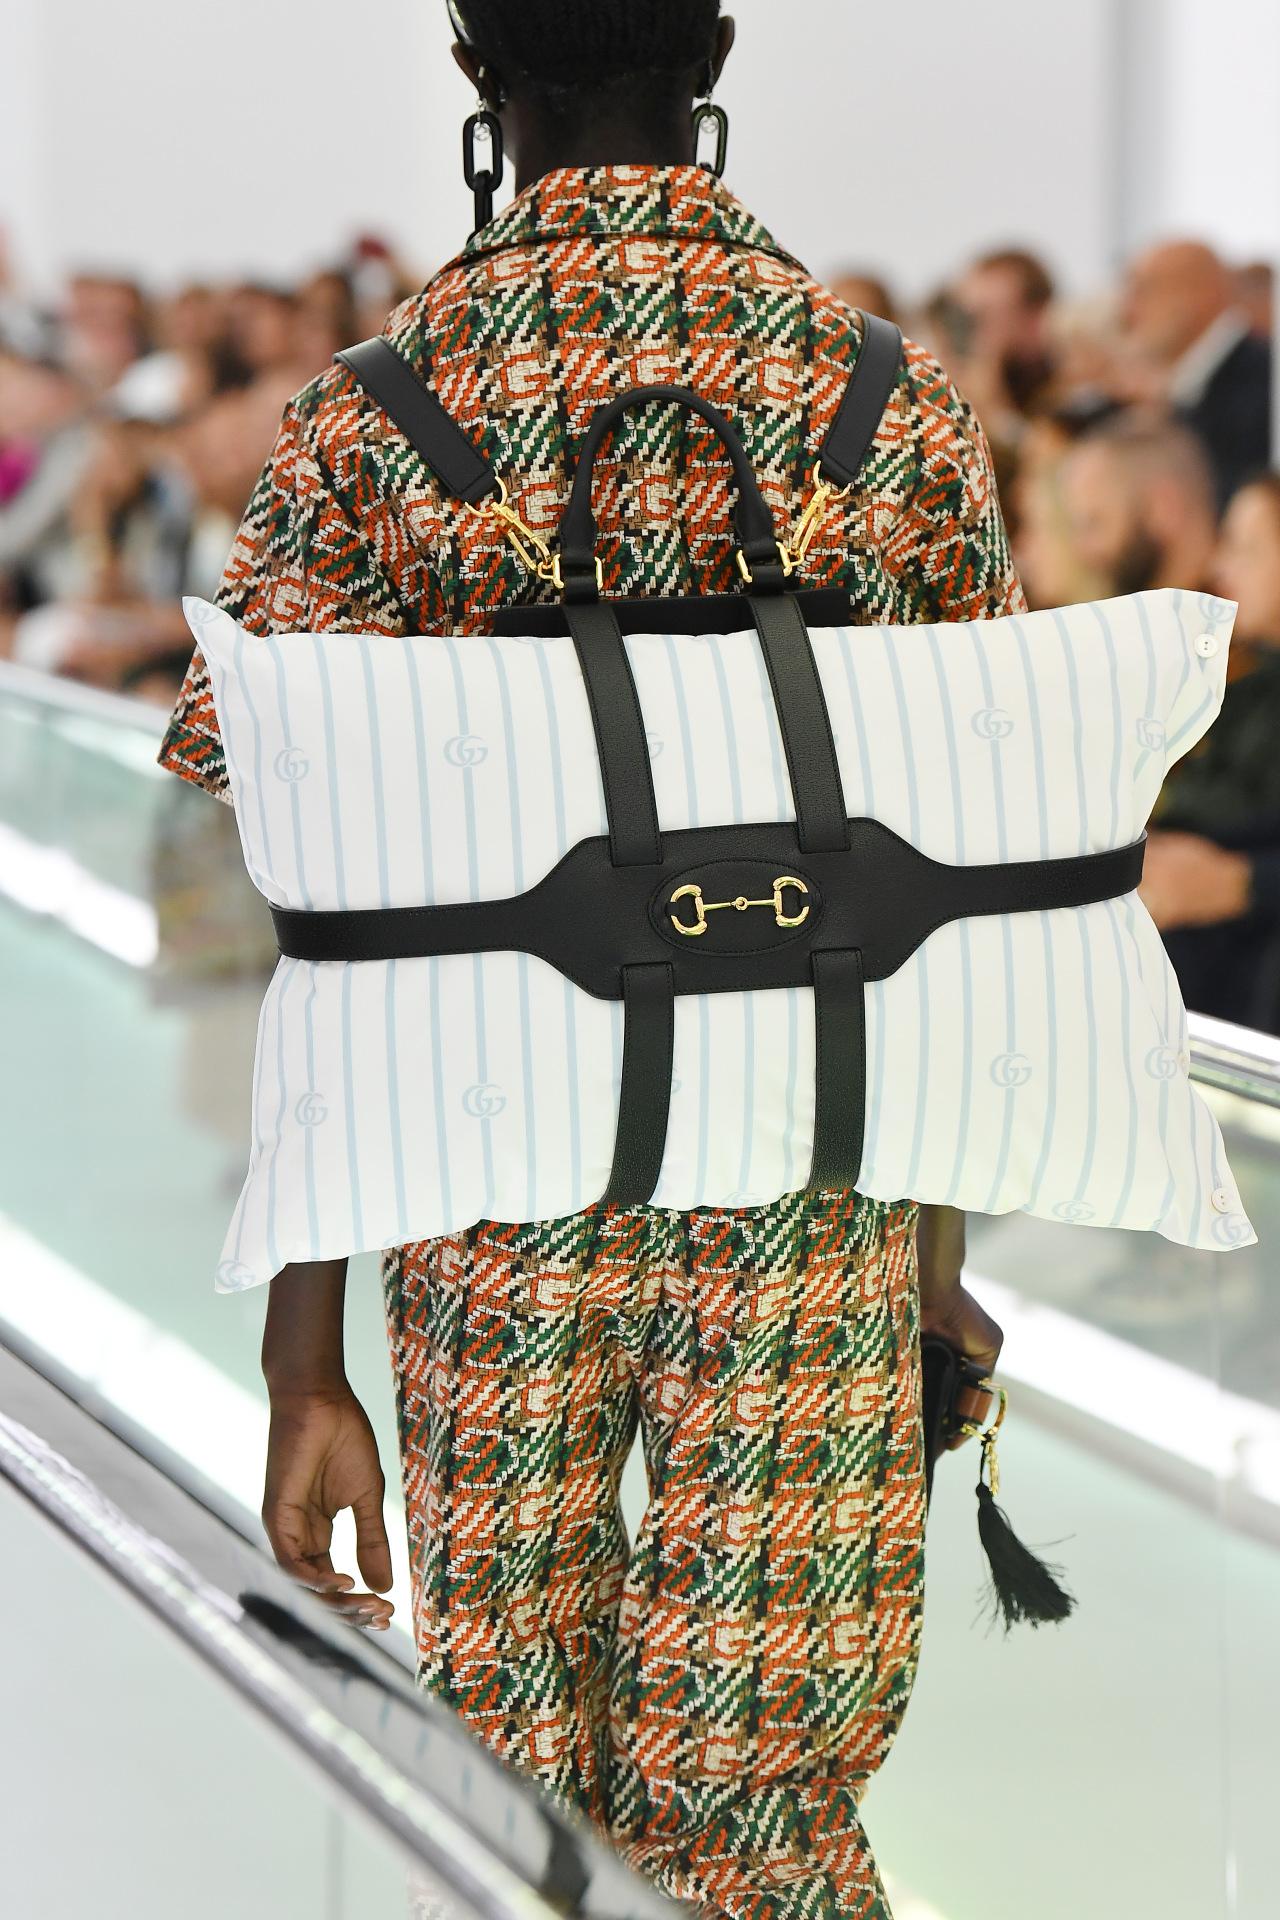 Designer louis vuitton and Gucci style neck pillows